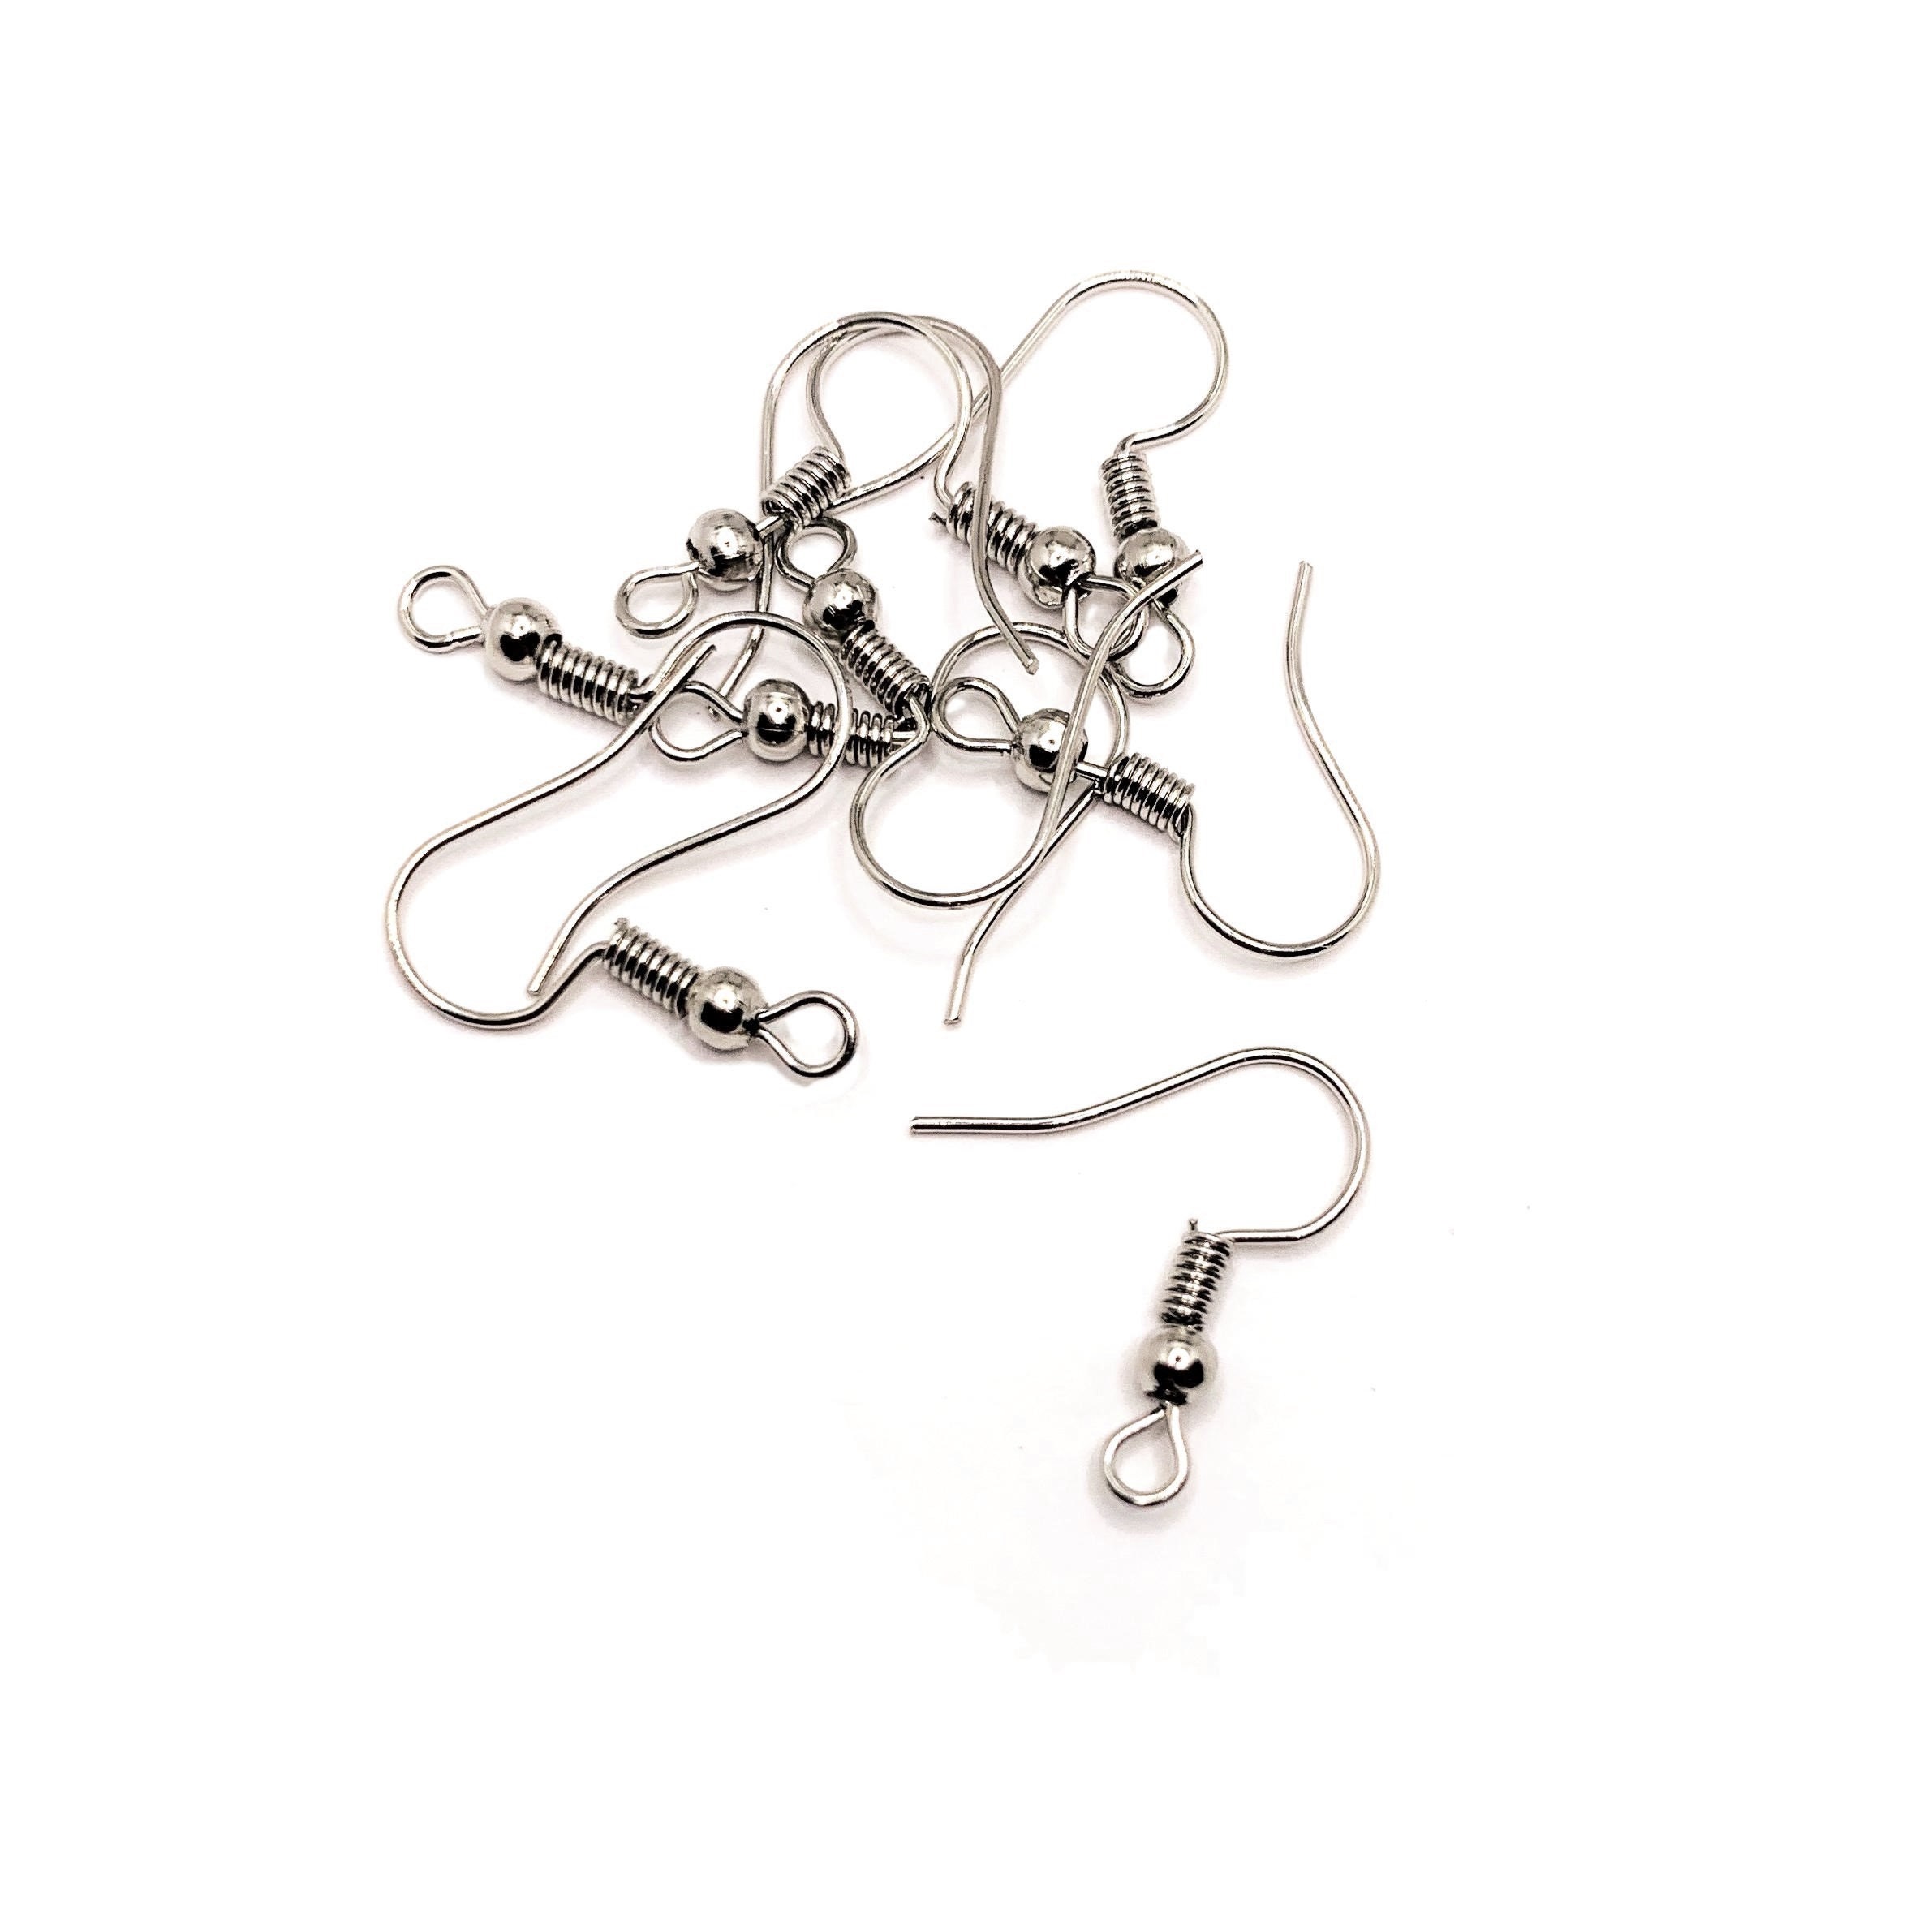 TOAOB 150pcs Hypoallergenic Earring Hooks Mixed Colors Ear Wire Hooks  Earring Making Kit with 1000pcs Open Jump Rings 200pcs Earring Backs for  Jewelry